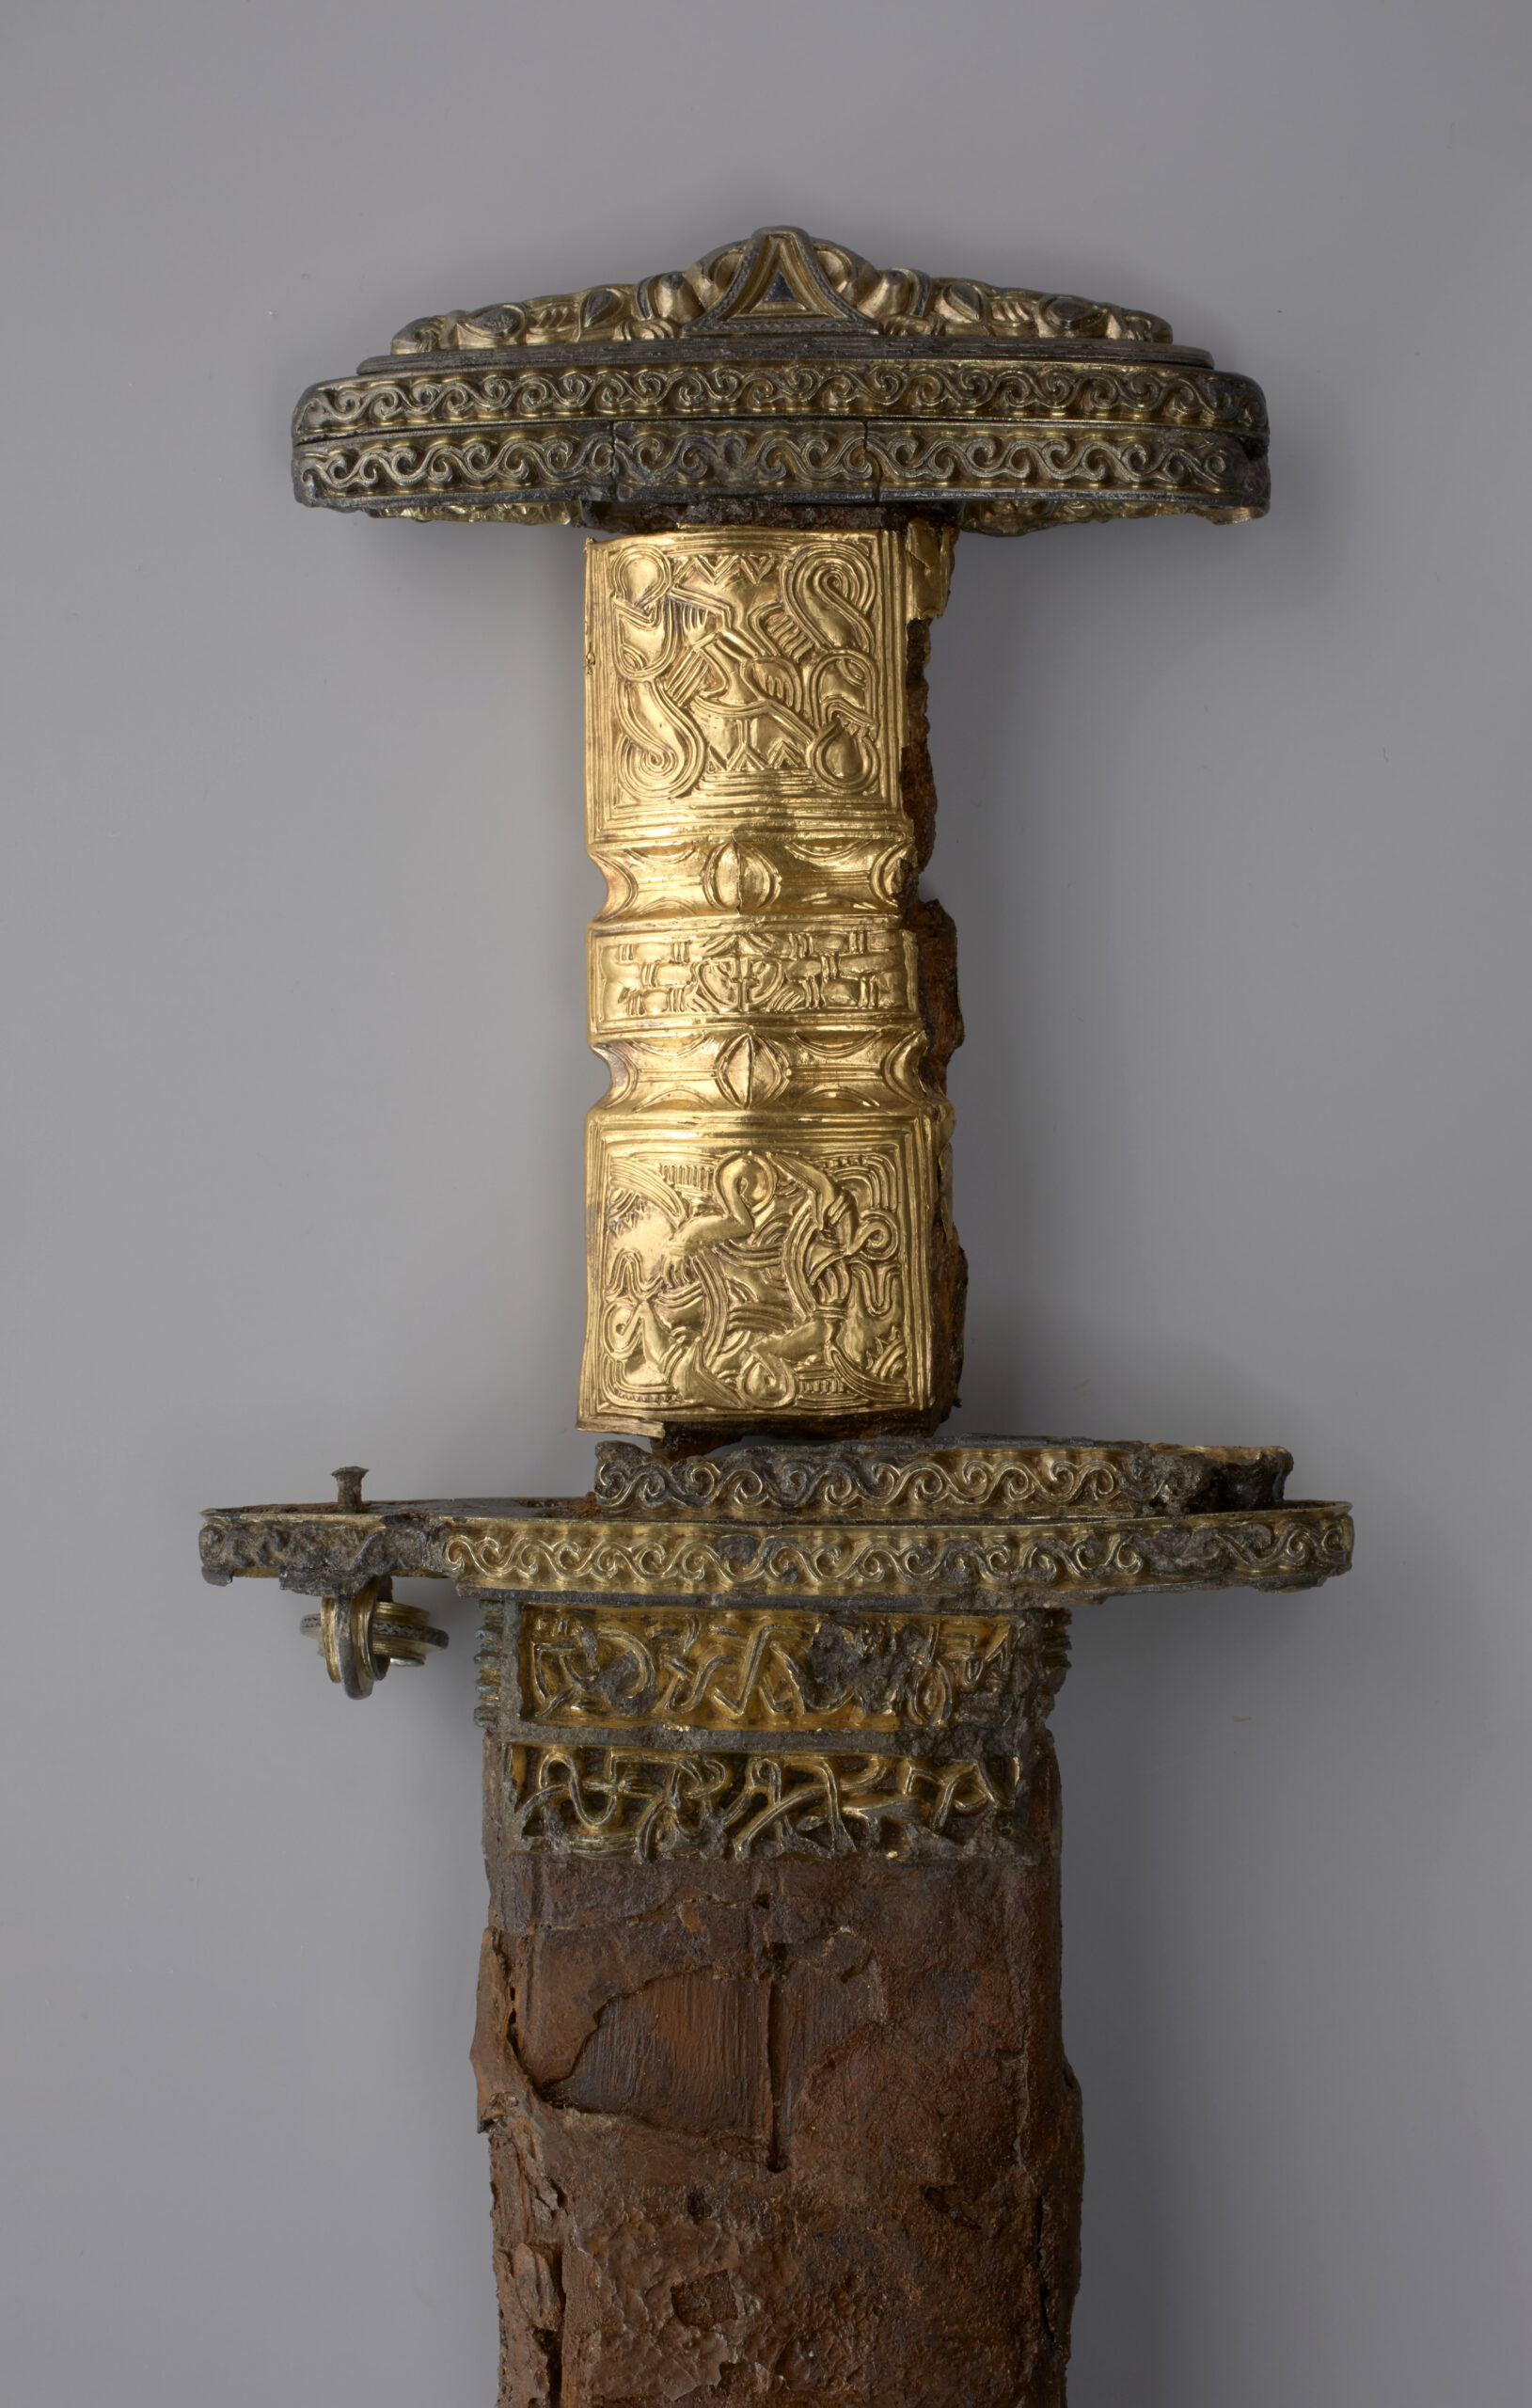 Sword. Snartemo, Agder, Norway. Kulturhistorisk Museum, Oslo, C26001. Photo: Kirsten Helgeland (CC BY-SA).